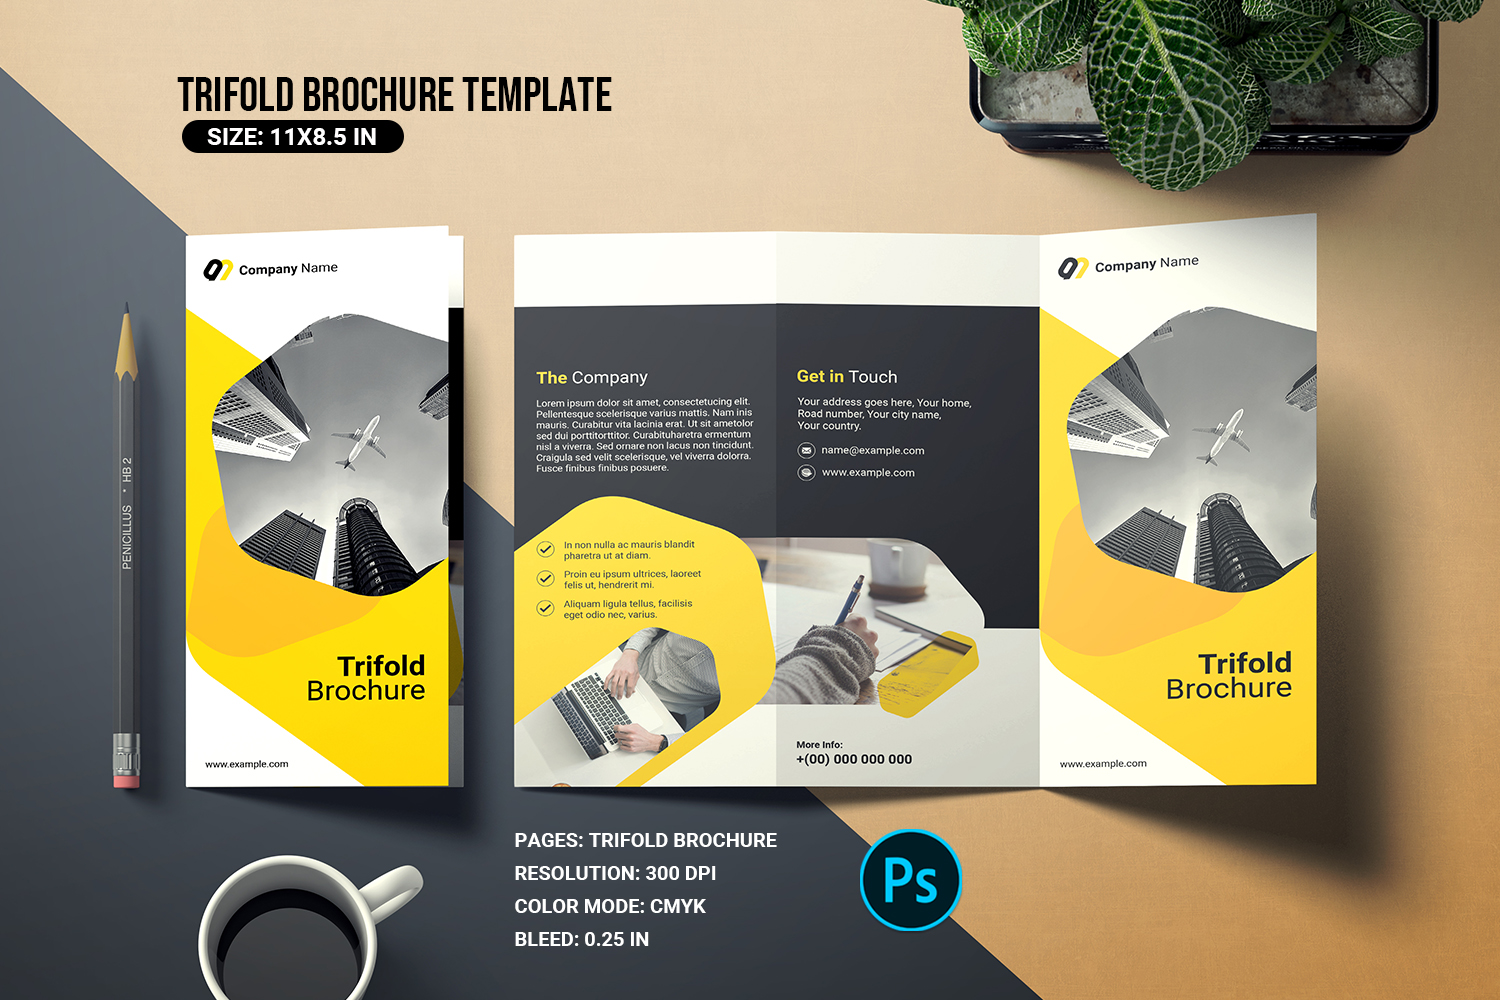 Trifold Corporate Brochure. Adobe Photoshop Template